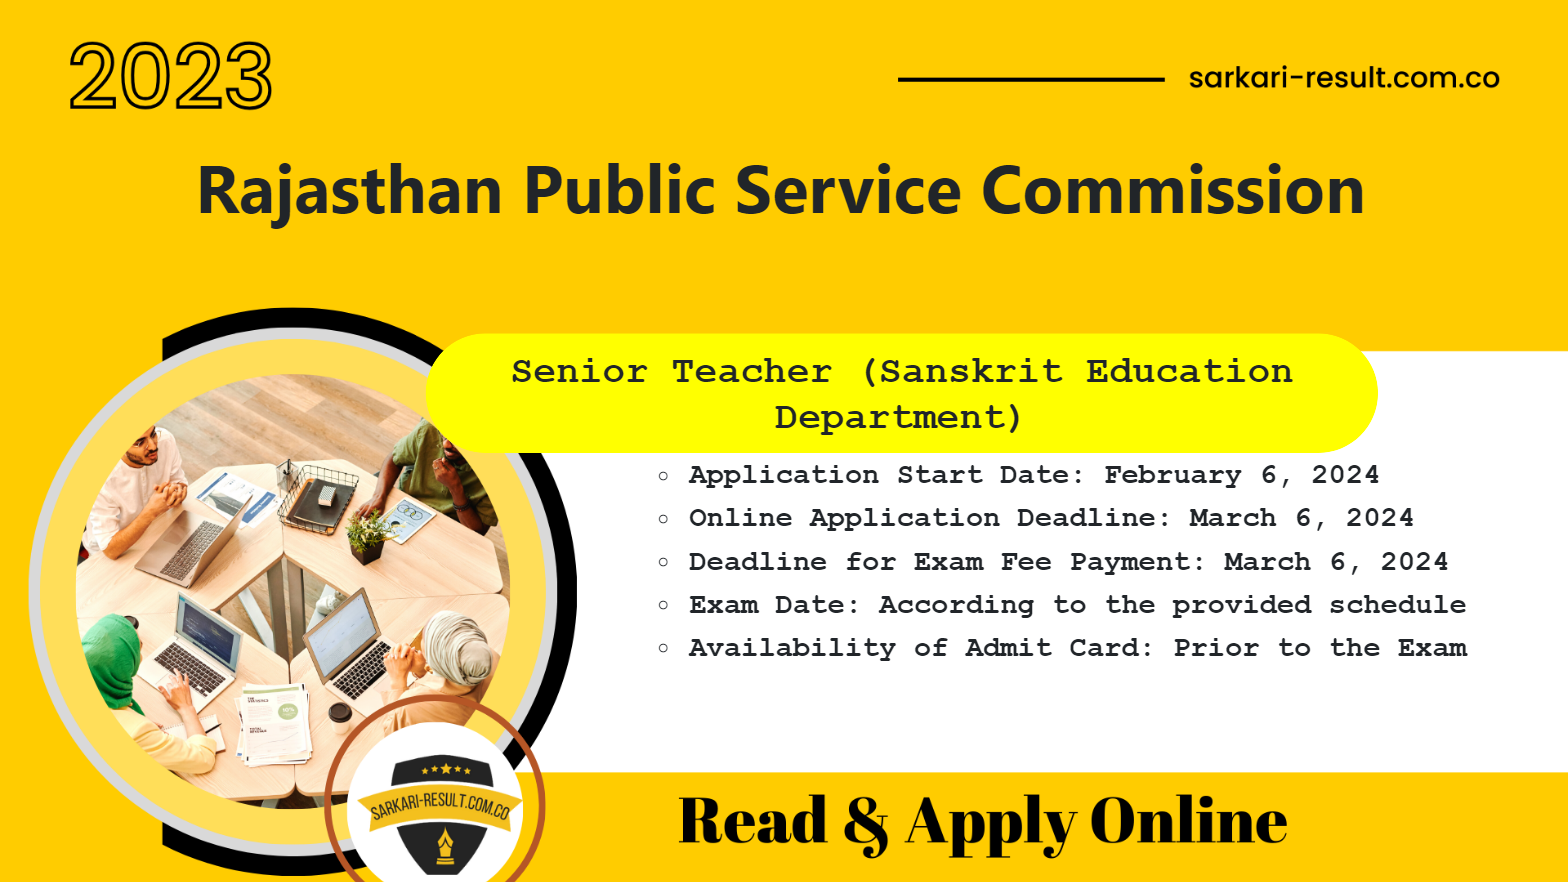 Apply online for 347 posts in the Rajasthan RPSC Senior Teacher Recruitment 2024.